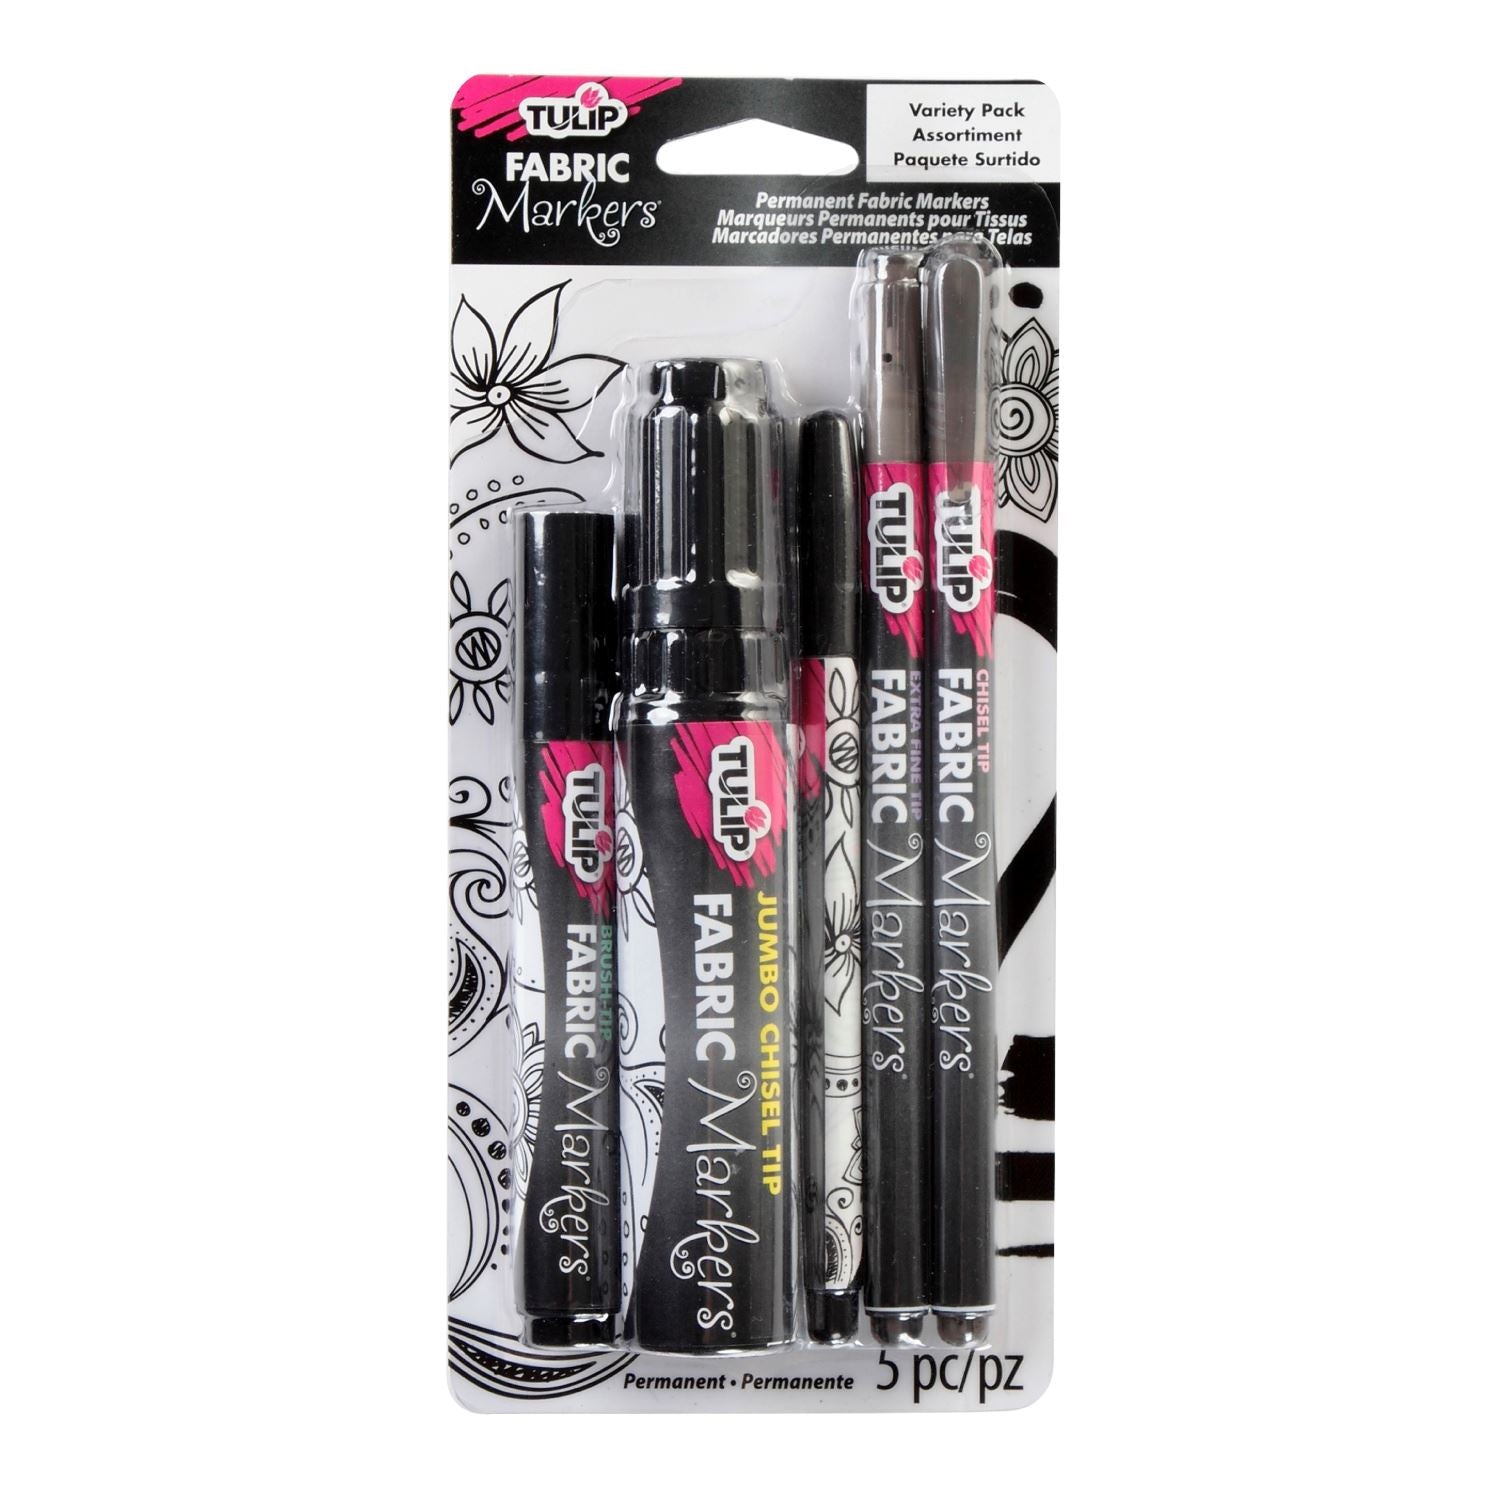 Black Fine Point Slick Writer Pen 3 Pack Set